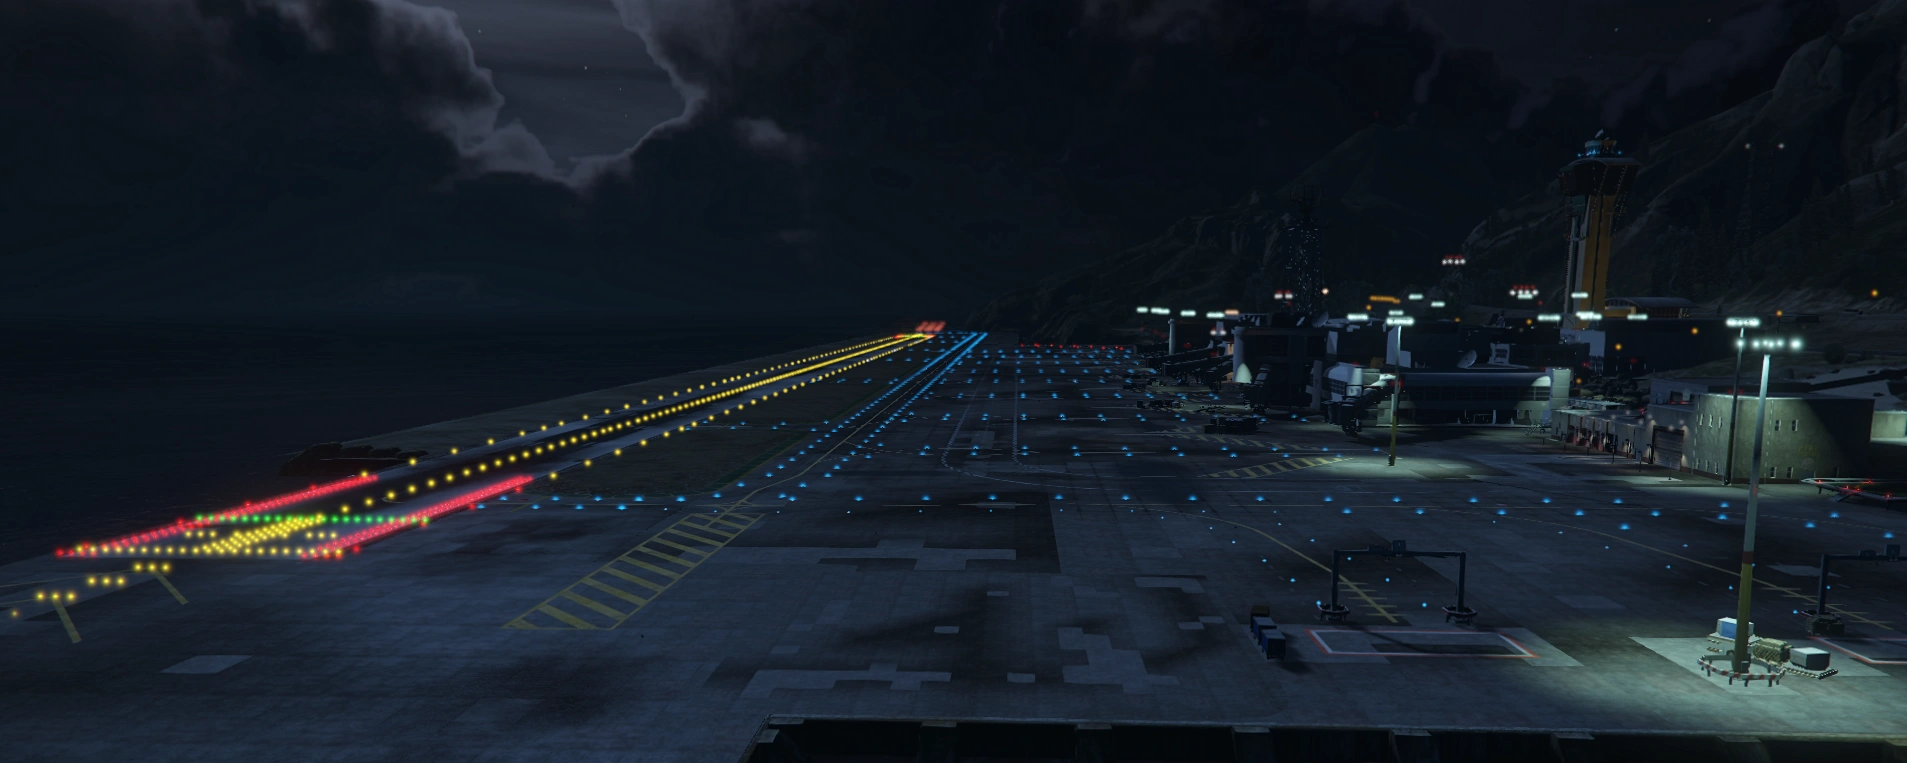 Paleto Bay International Airport [EDITED RELEASE]-IMAGE